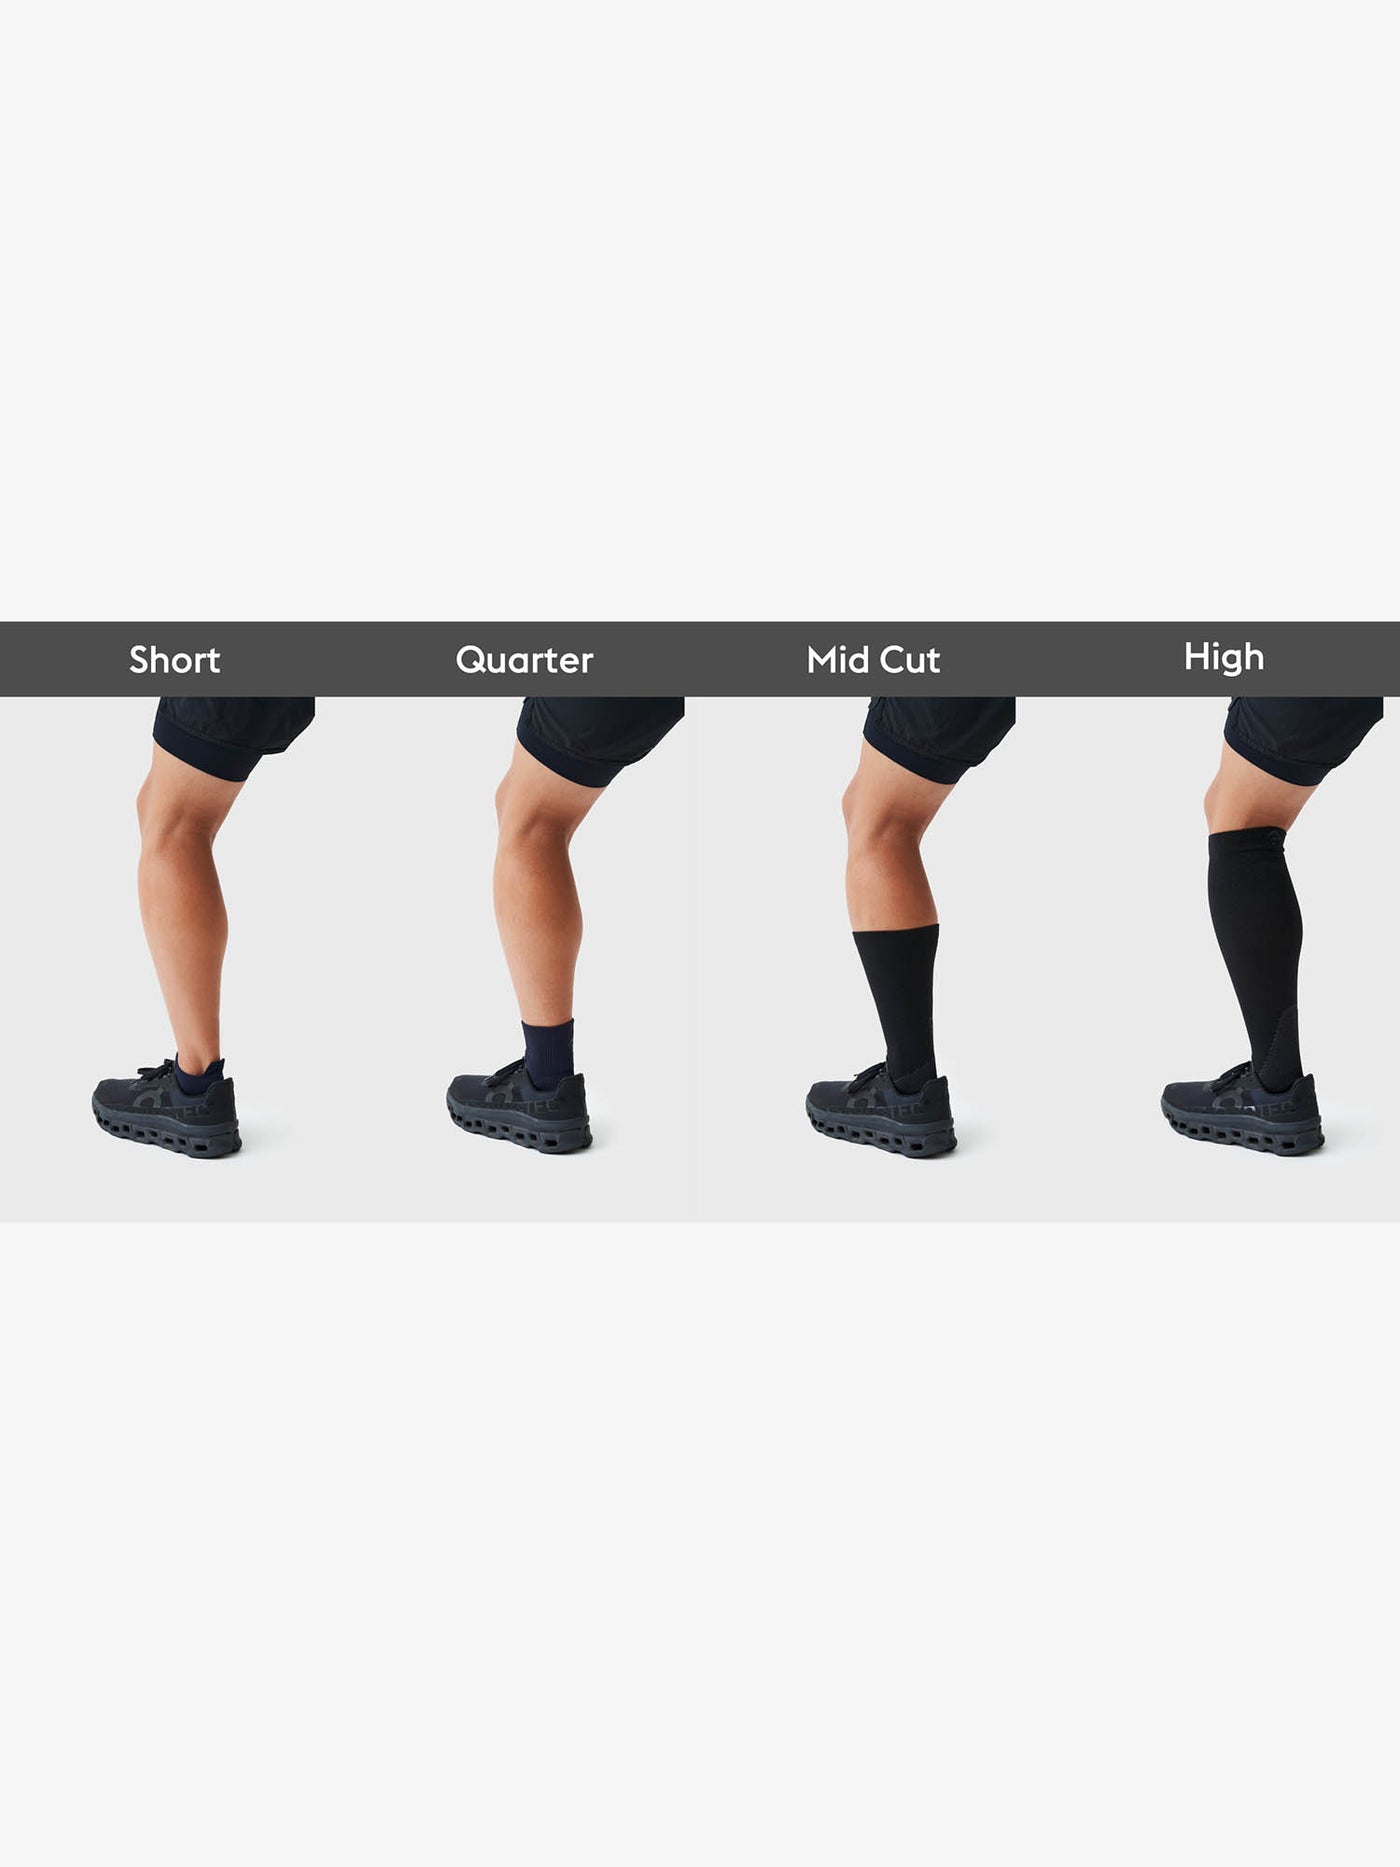 C3fit Arch Support Trekking Socks (Heavy